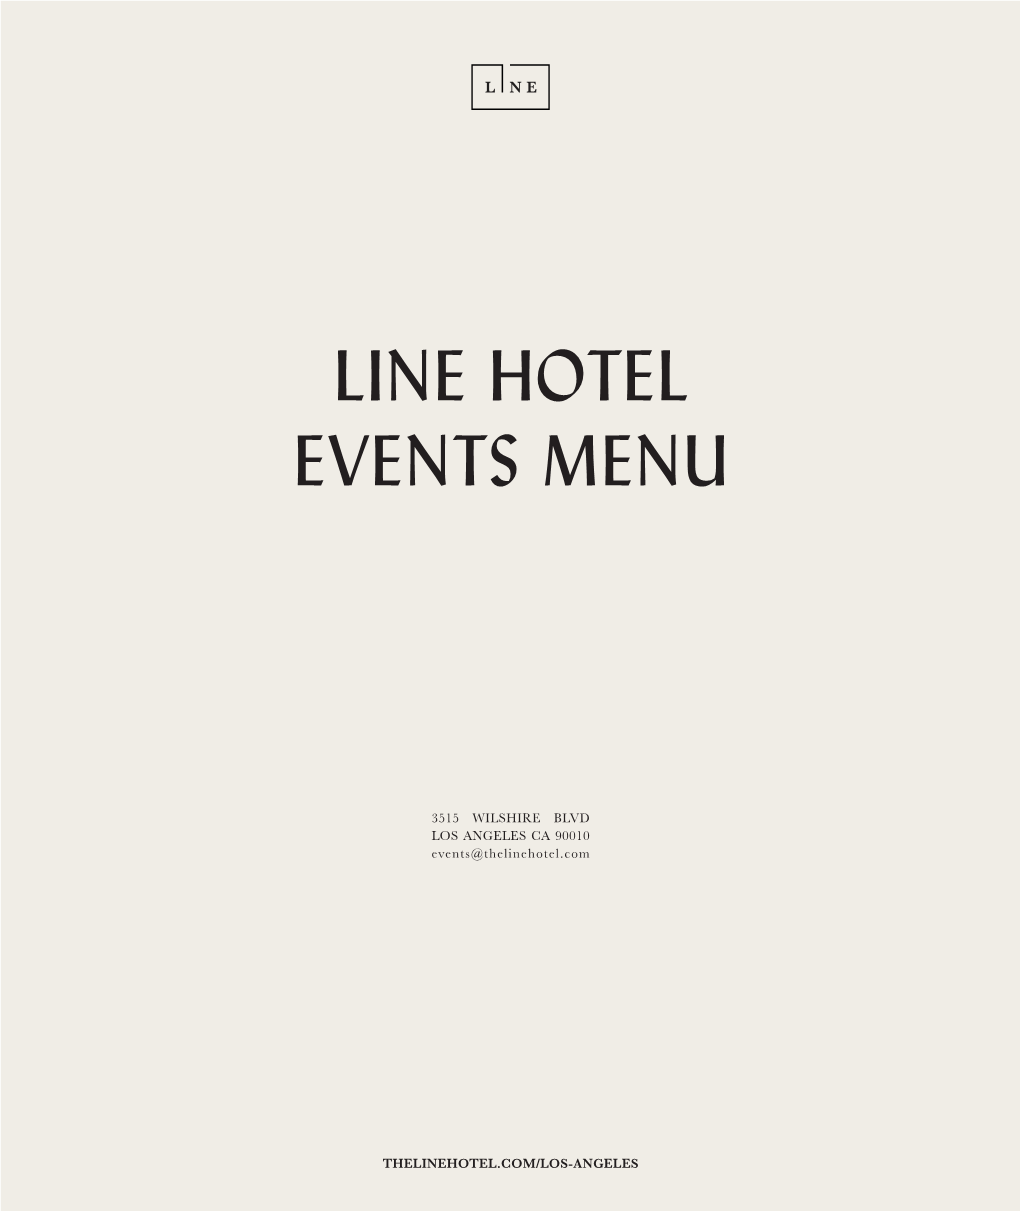 Line Hotel Events Menu